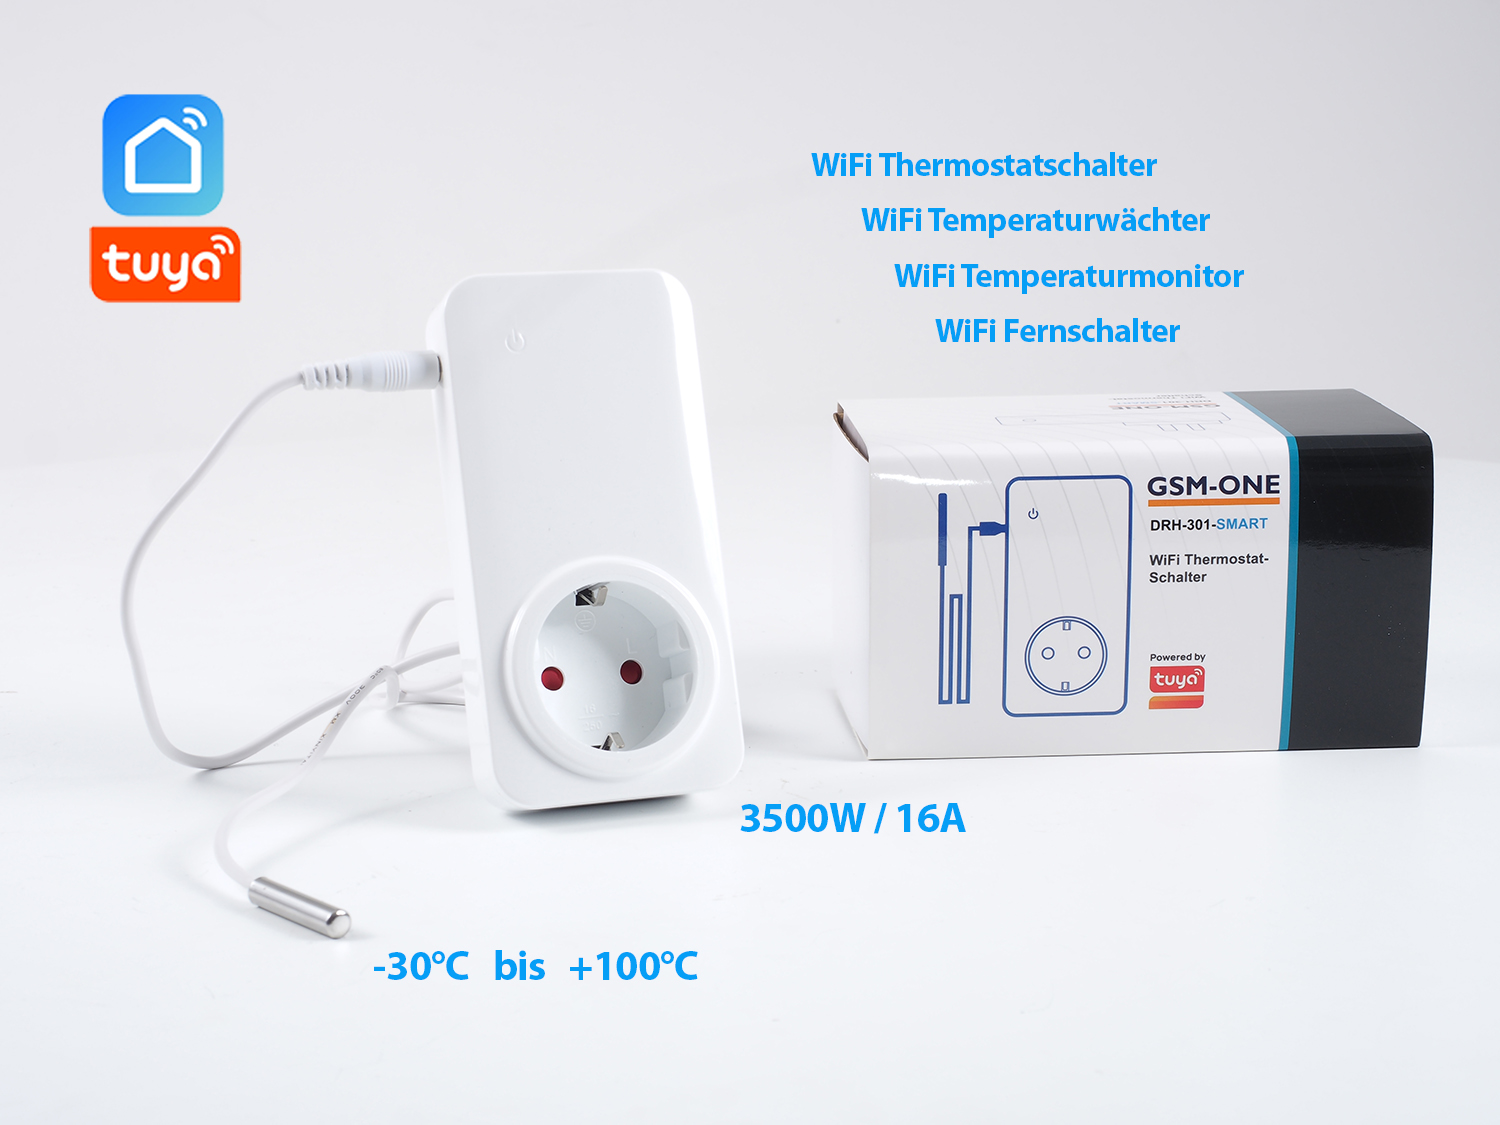 DRH-301-SMART, WLAN/WiFi Thermostatschalter, Temperaturwächter, Smart-Home  Fernschalter